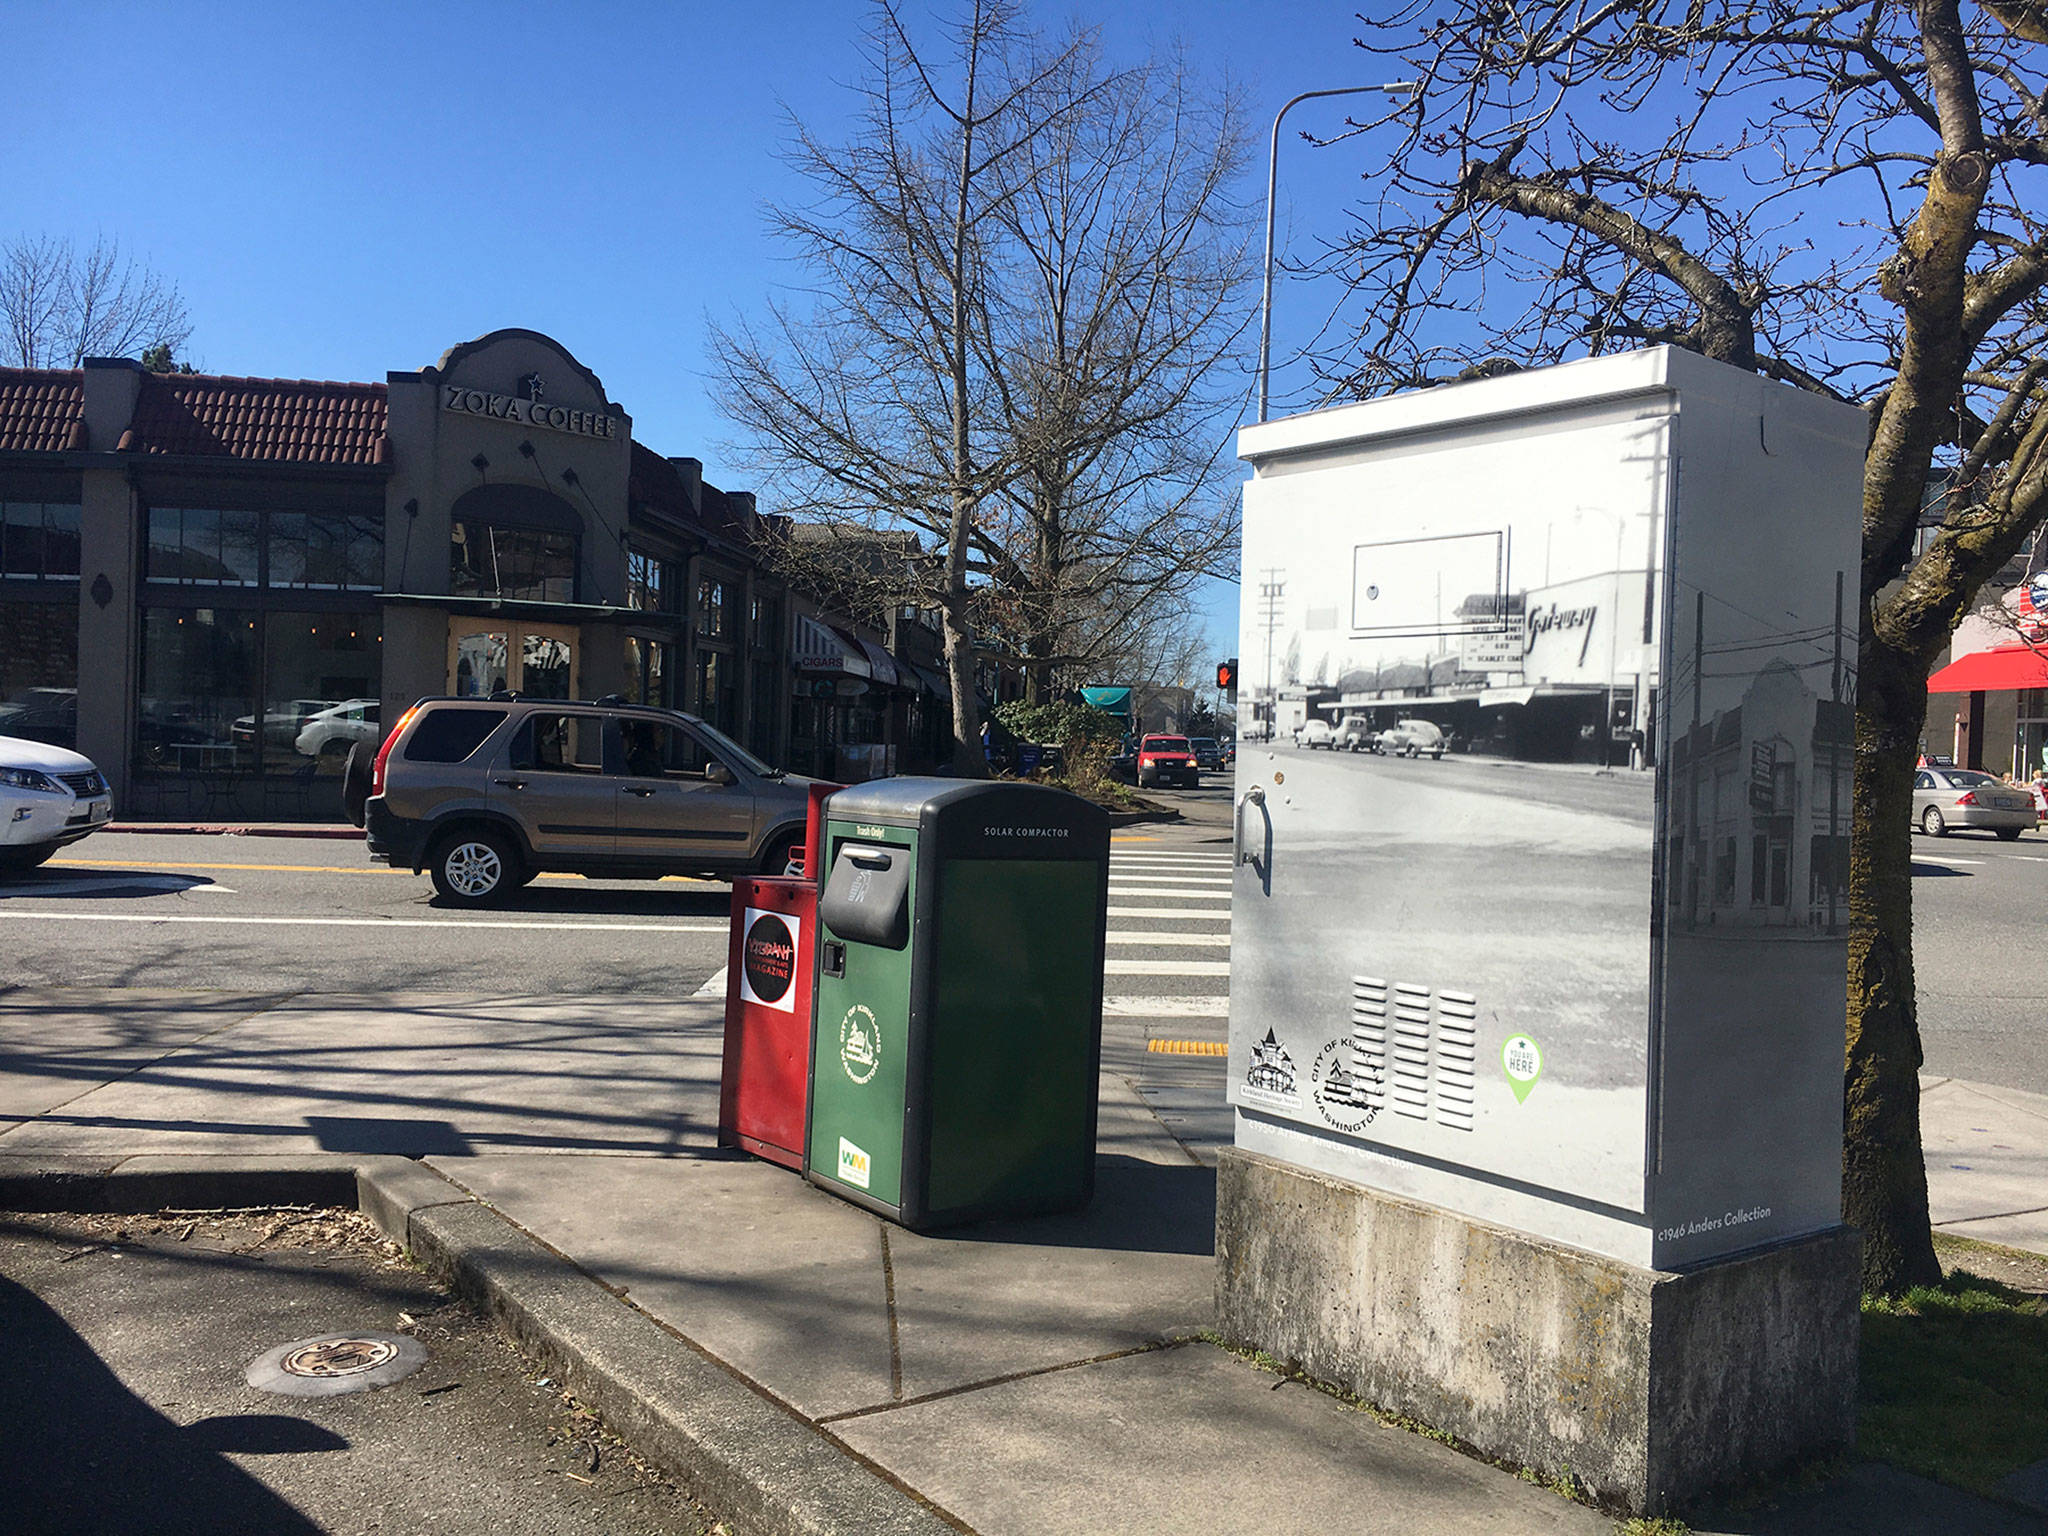 Downtown Kirkland’s utility boxes get a facelift